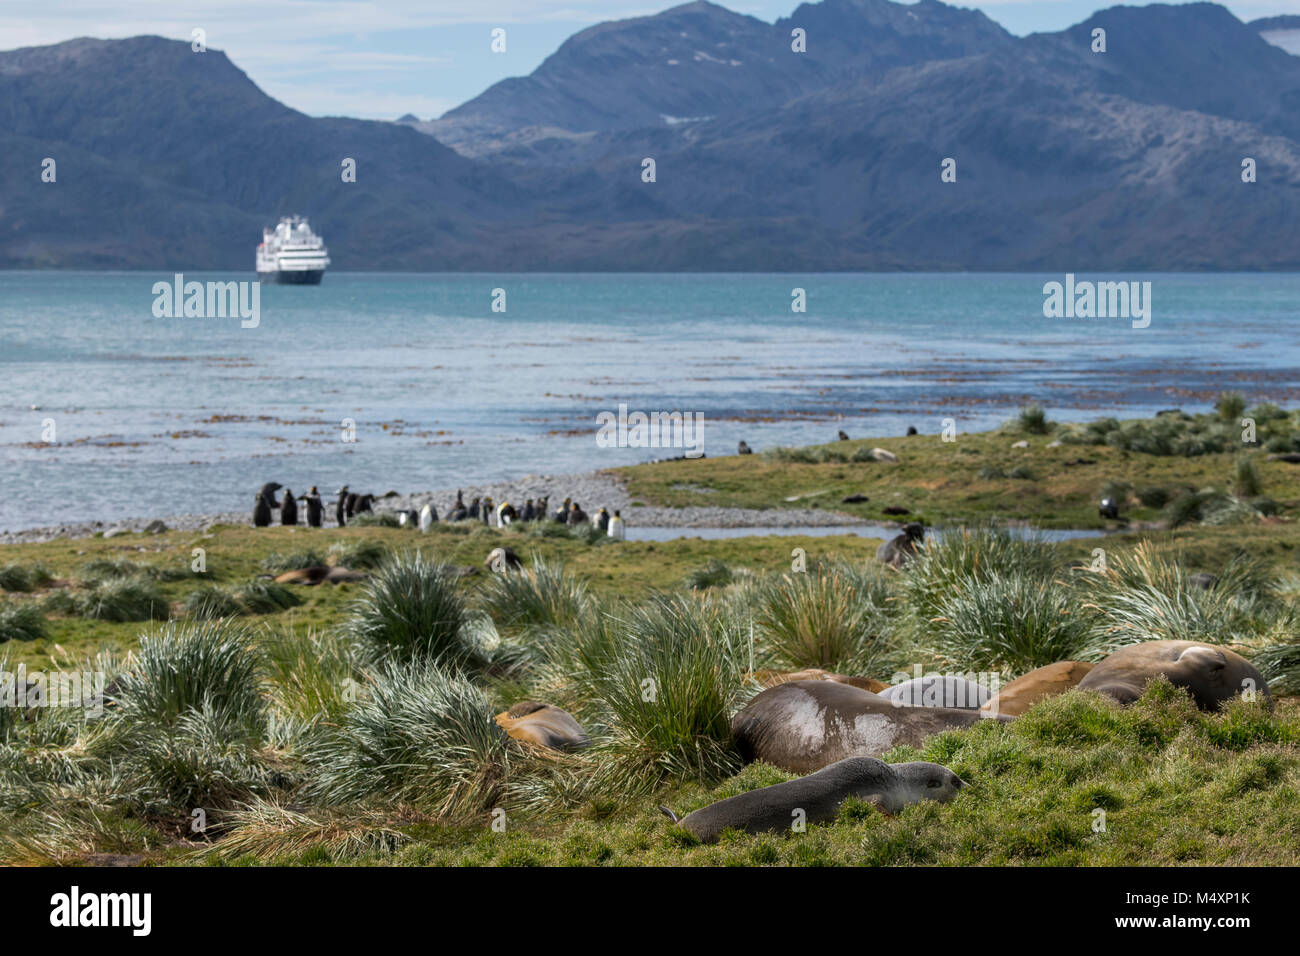 British territory, South Georgia. Historic whaling settlement of Grytviken. Female Southern elephant seals (Wild: Mirounga leonina) in tussock grass. Stock Photo